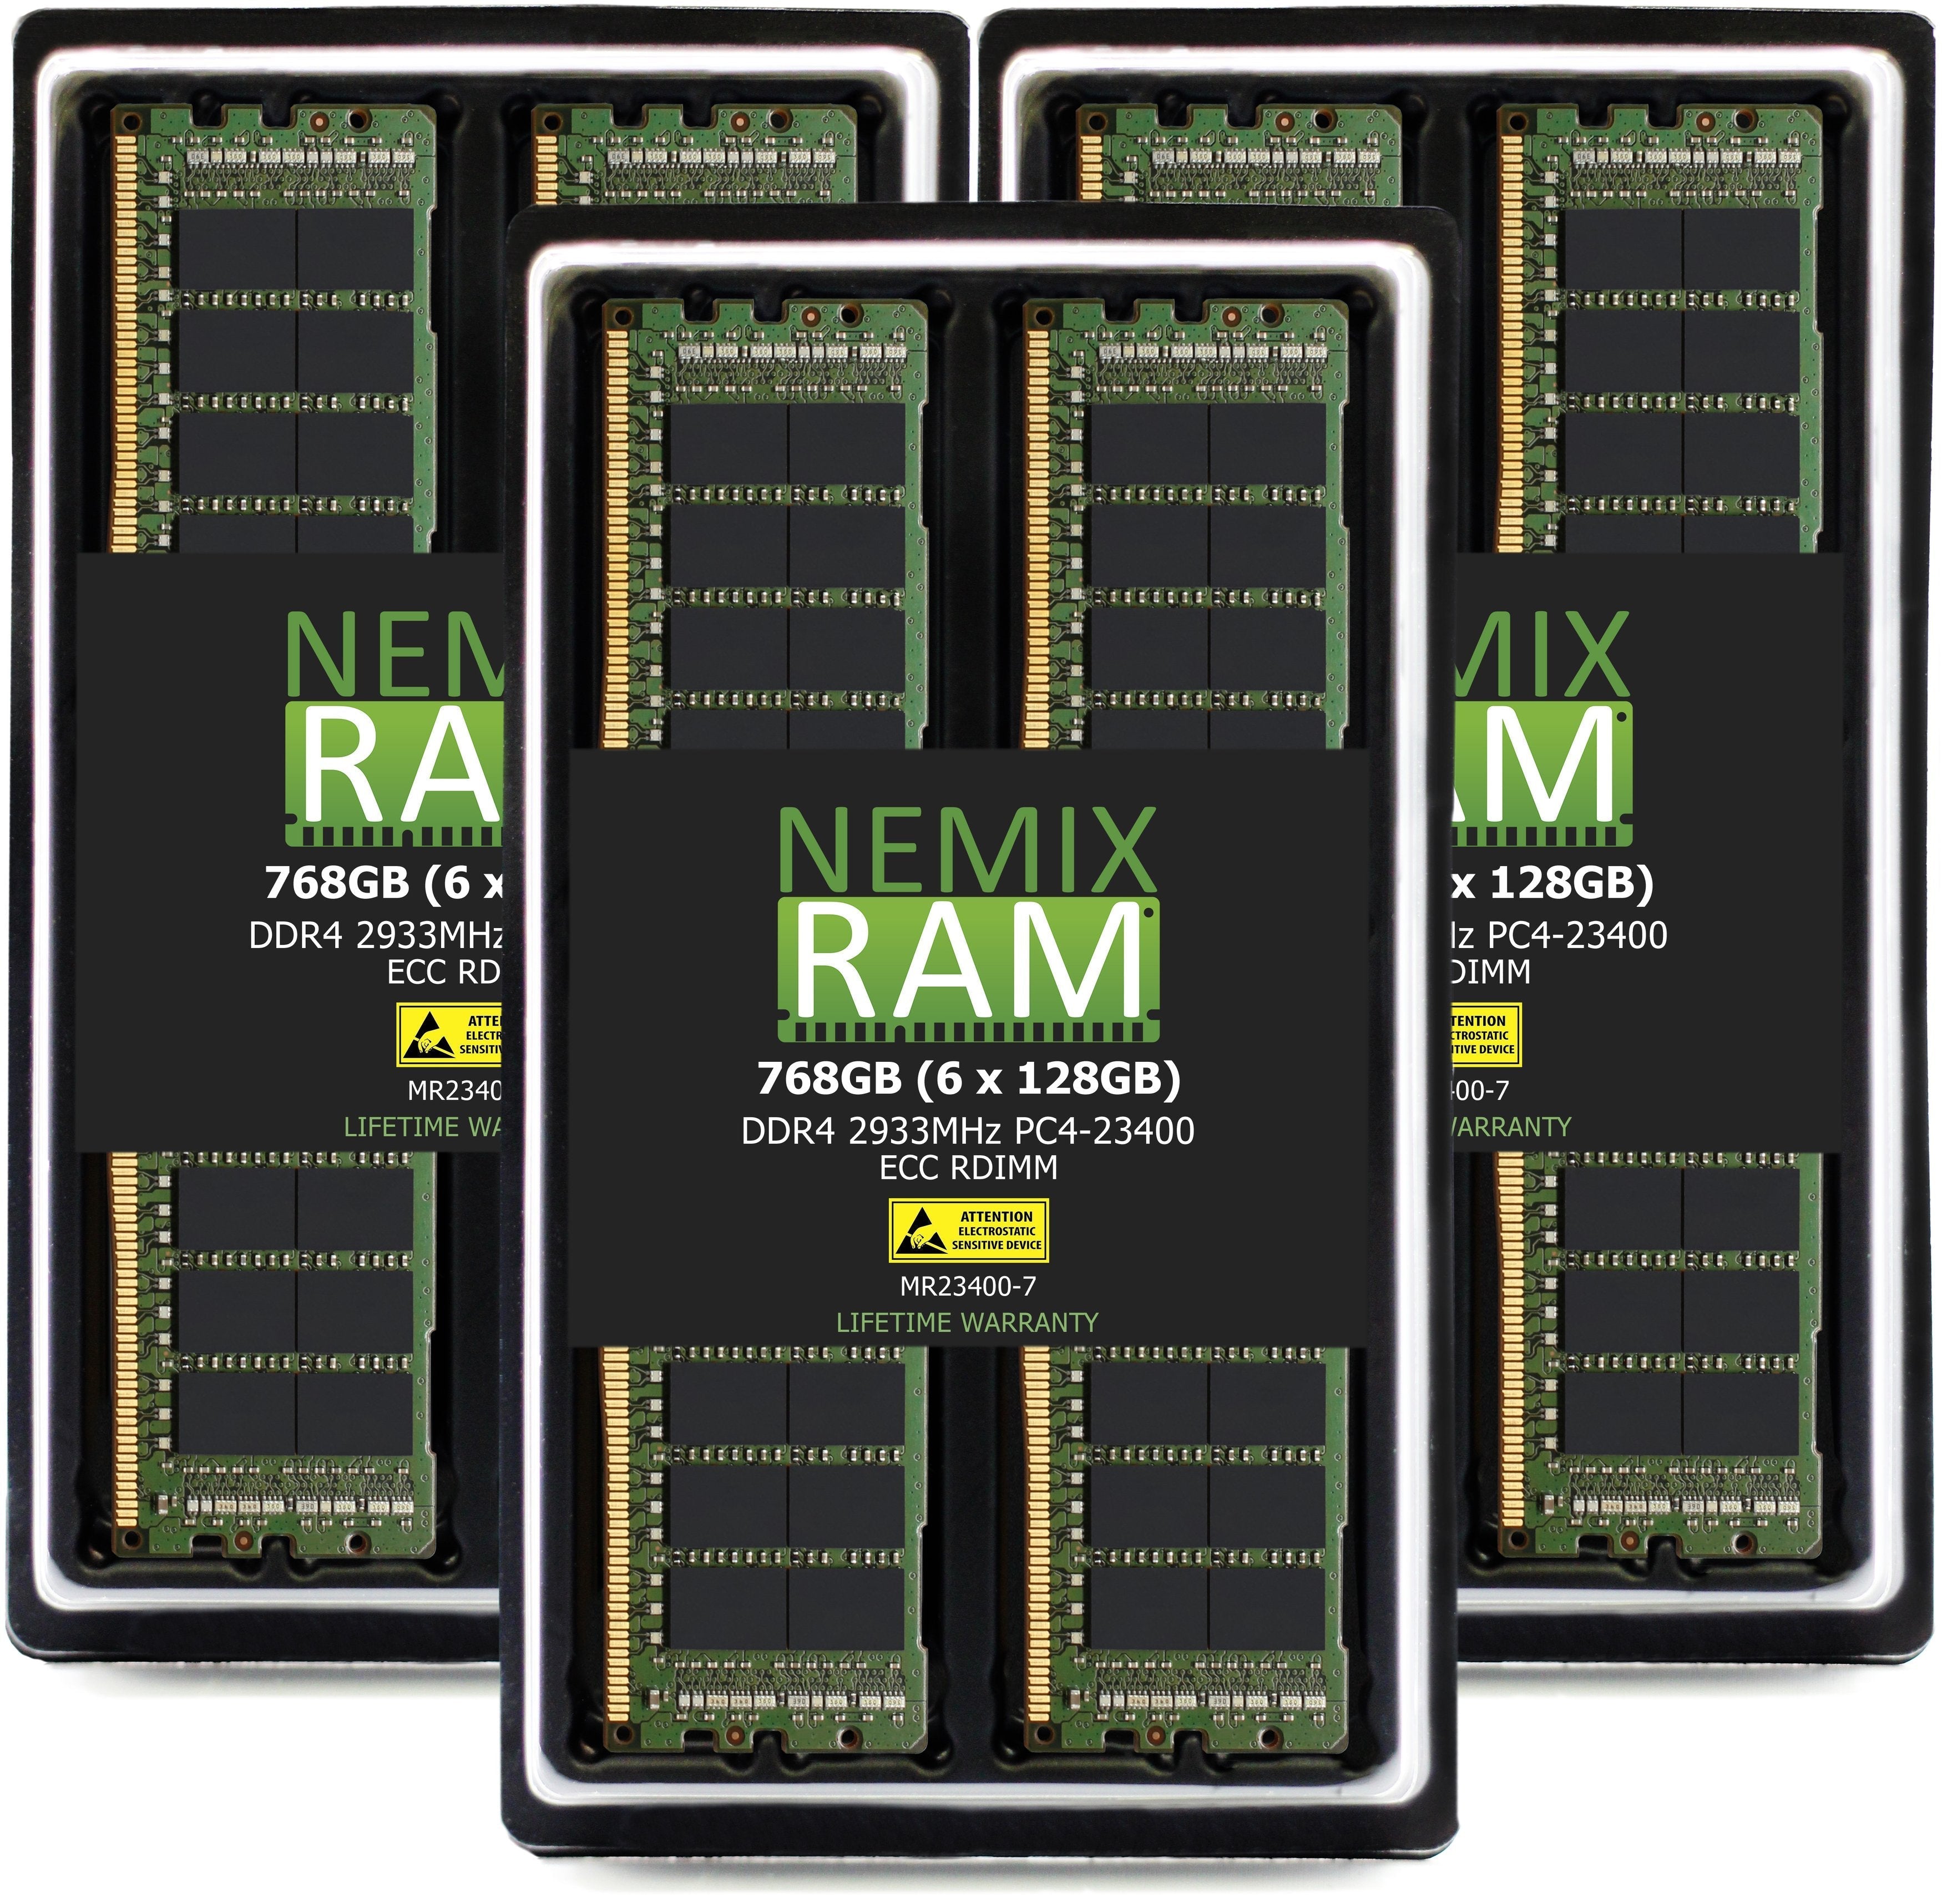 DDR4 2933MHZ PC4-23400 RDIMM 4RX4